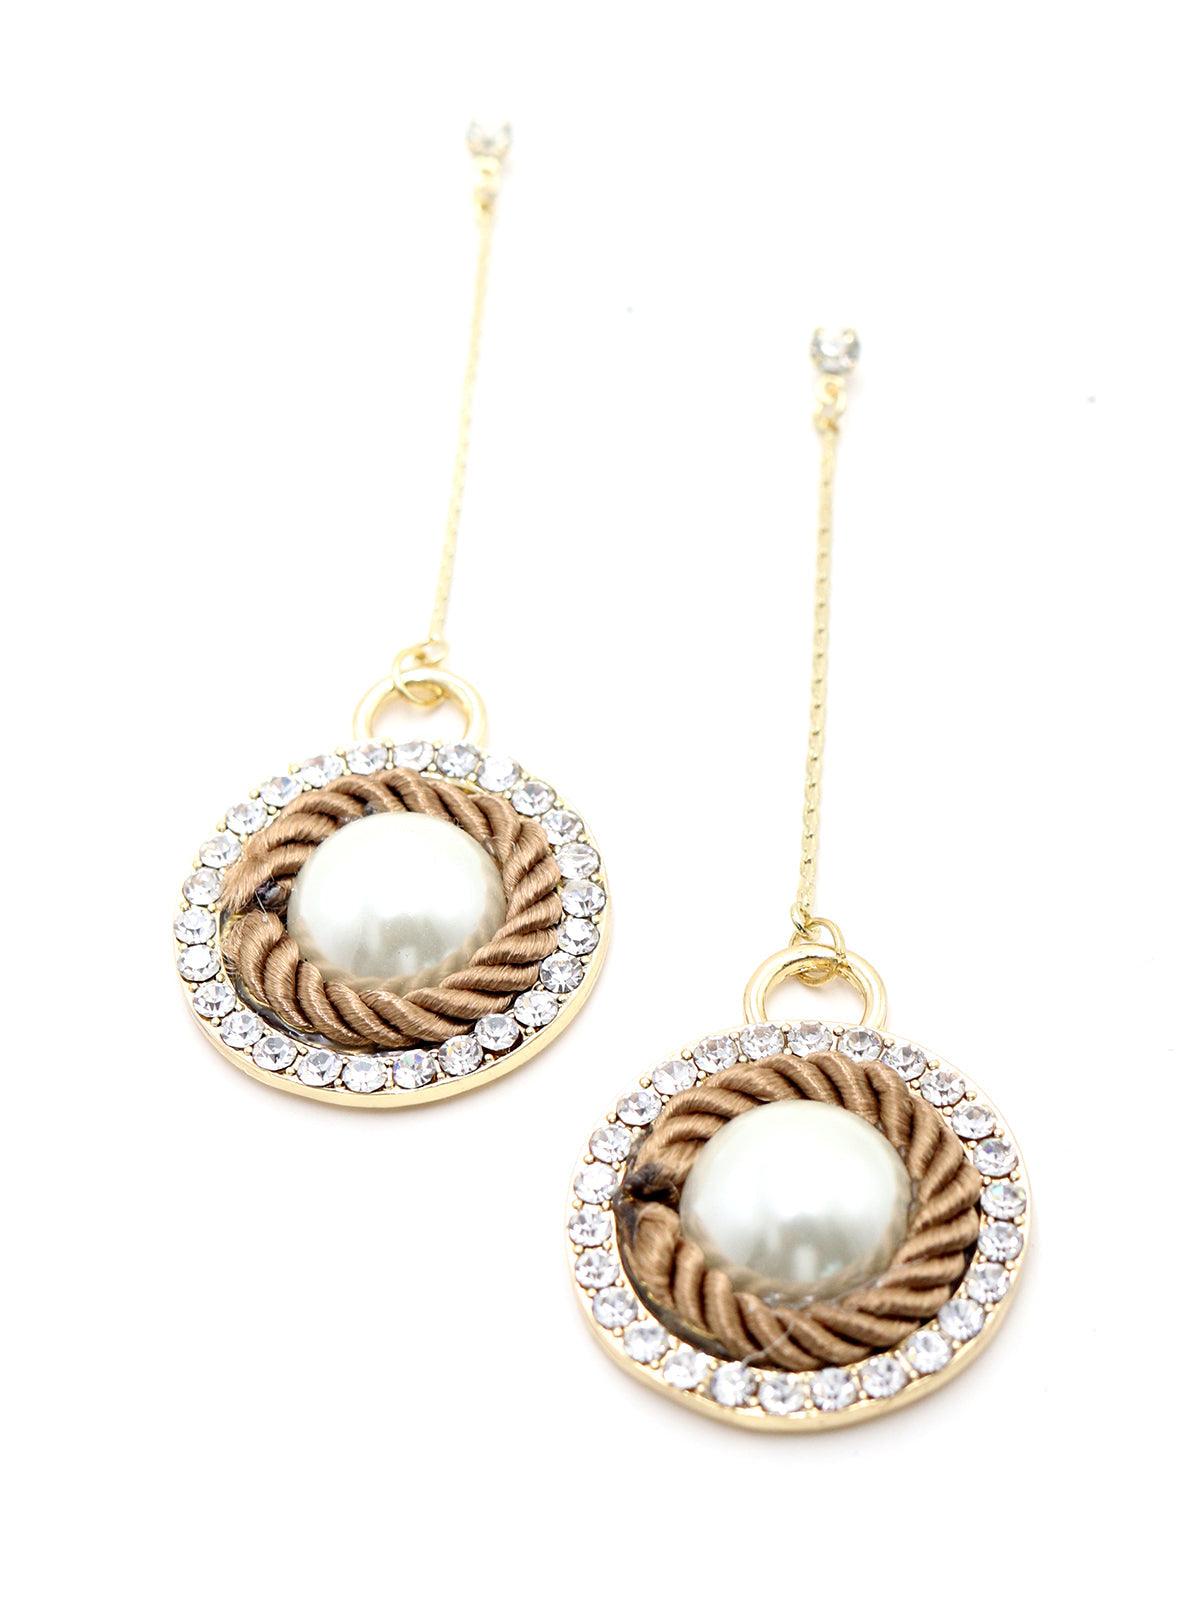 Copper Gold Awesome Dangle Earrings - Odette